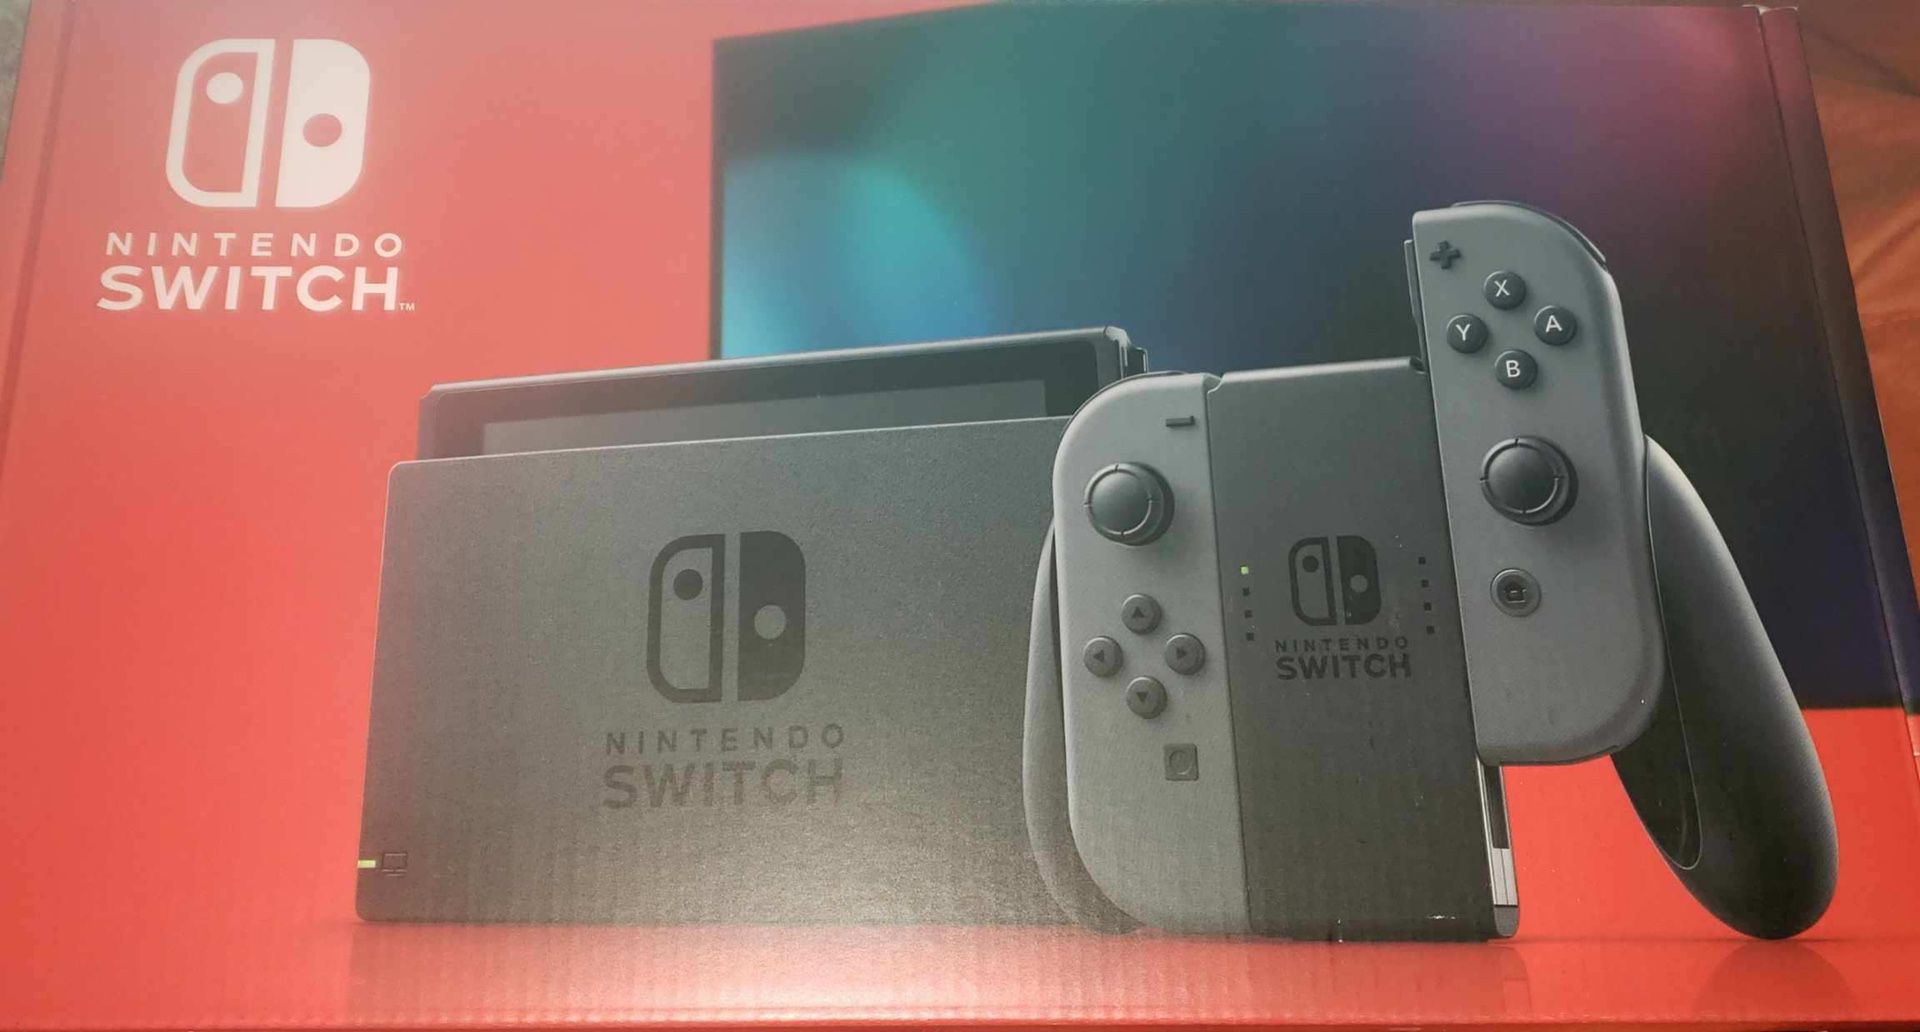 Nintendo Switch (New in box)